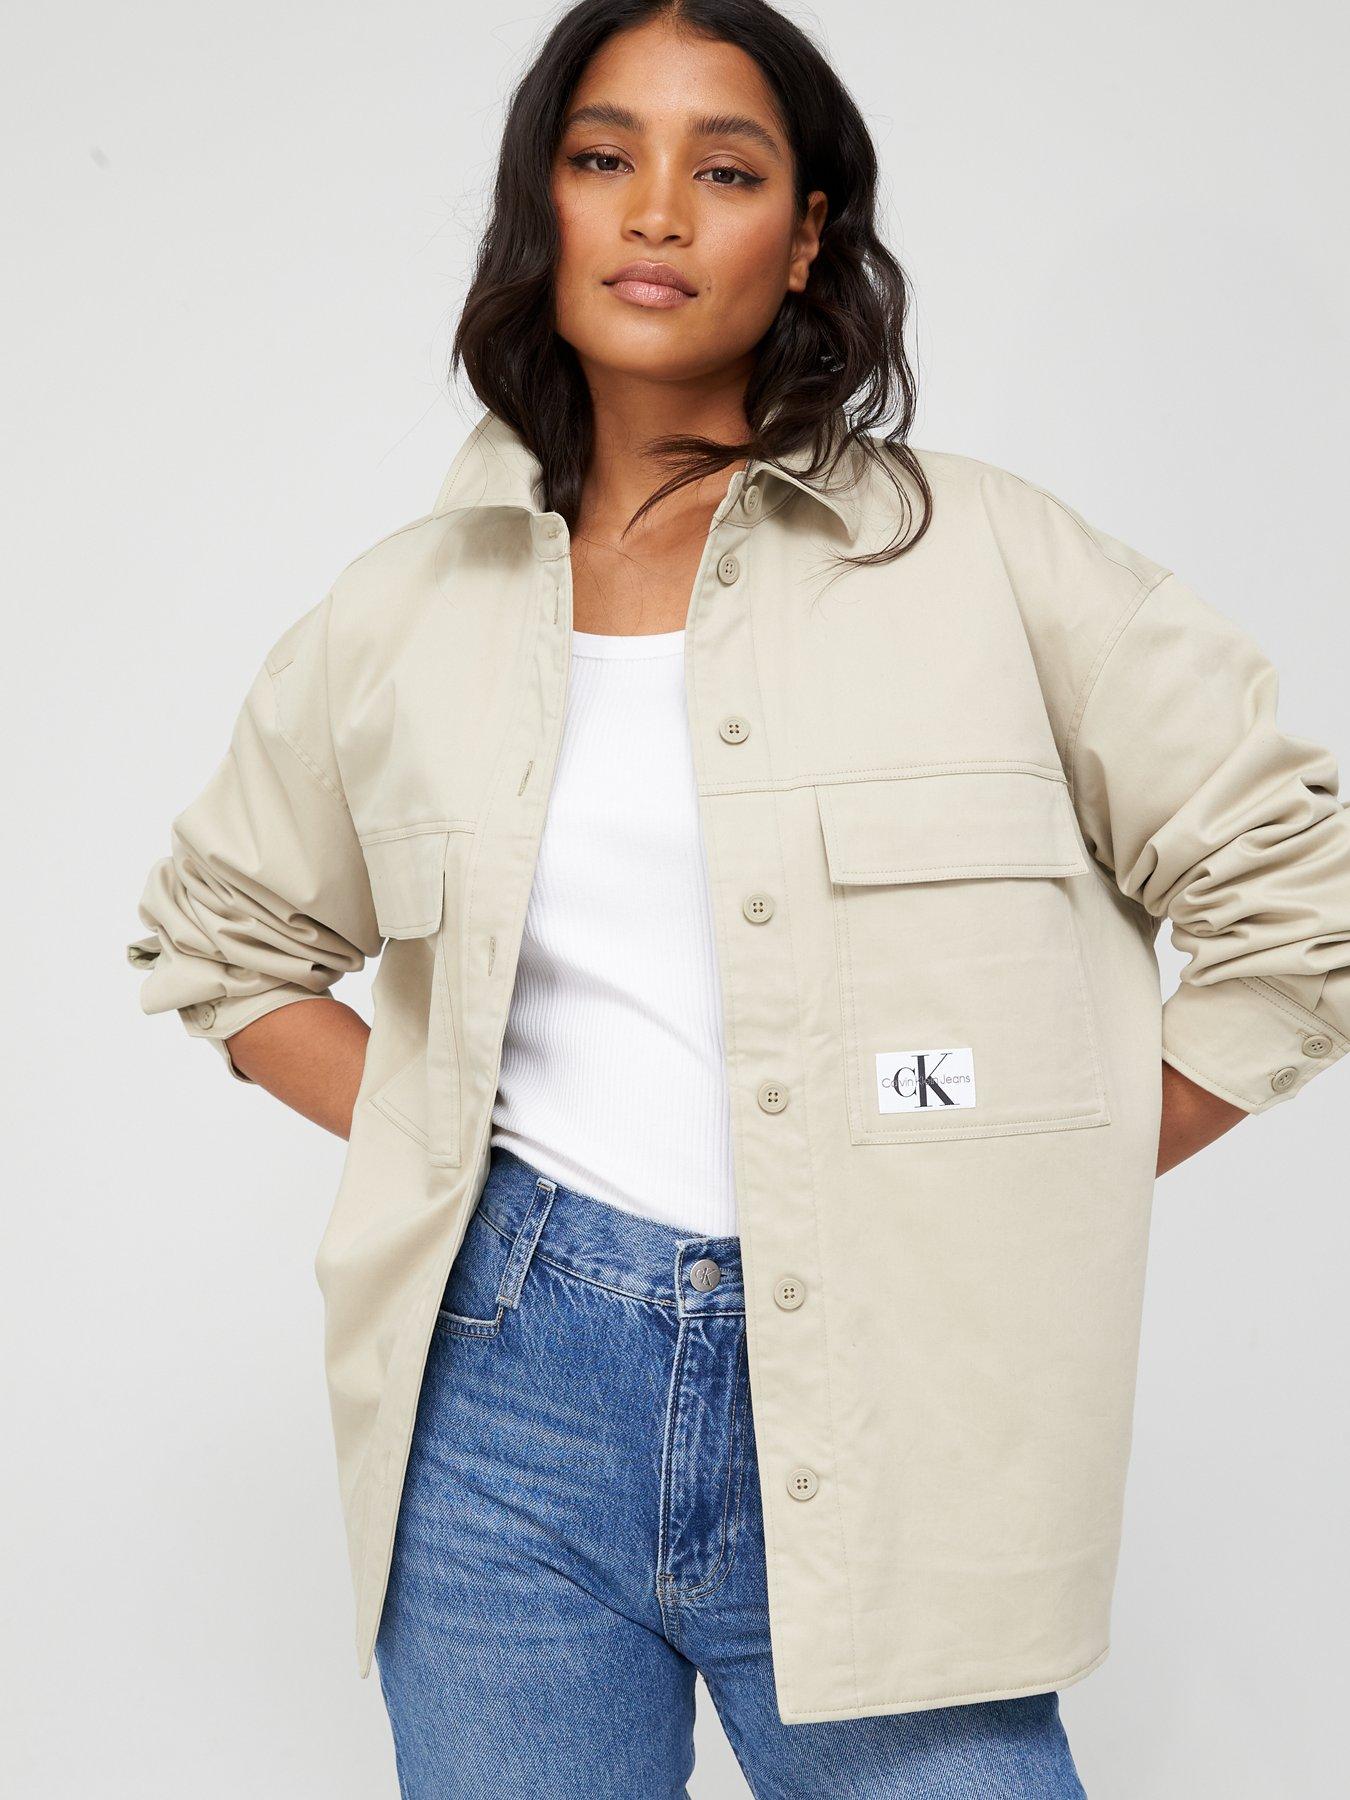 discount 53% Parfois overshirt White/Black Single WOMEN FASHION Jackets Overshirt Jean 